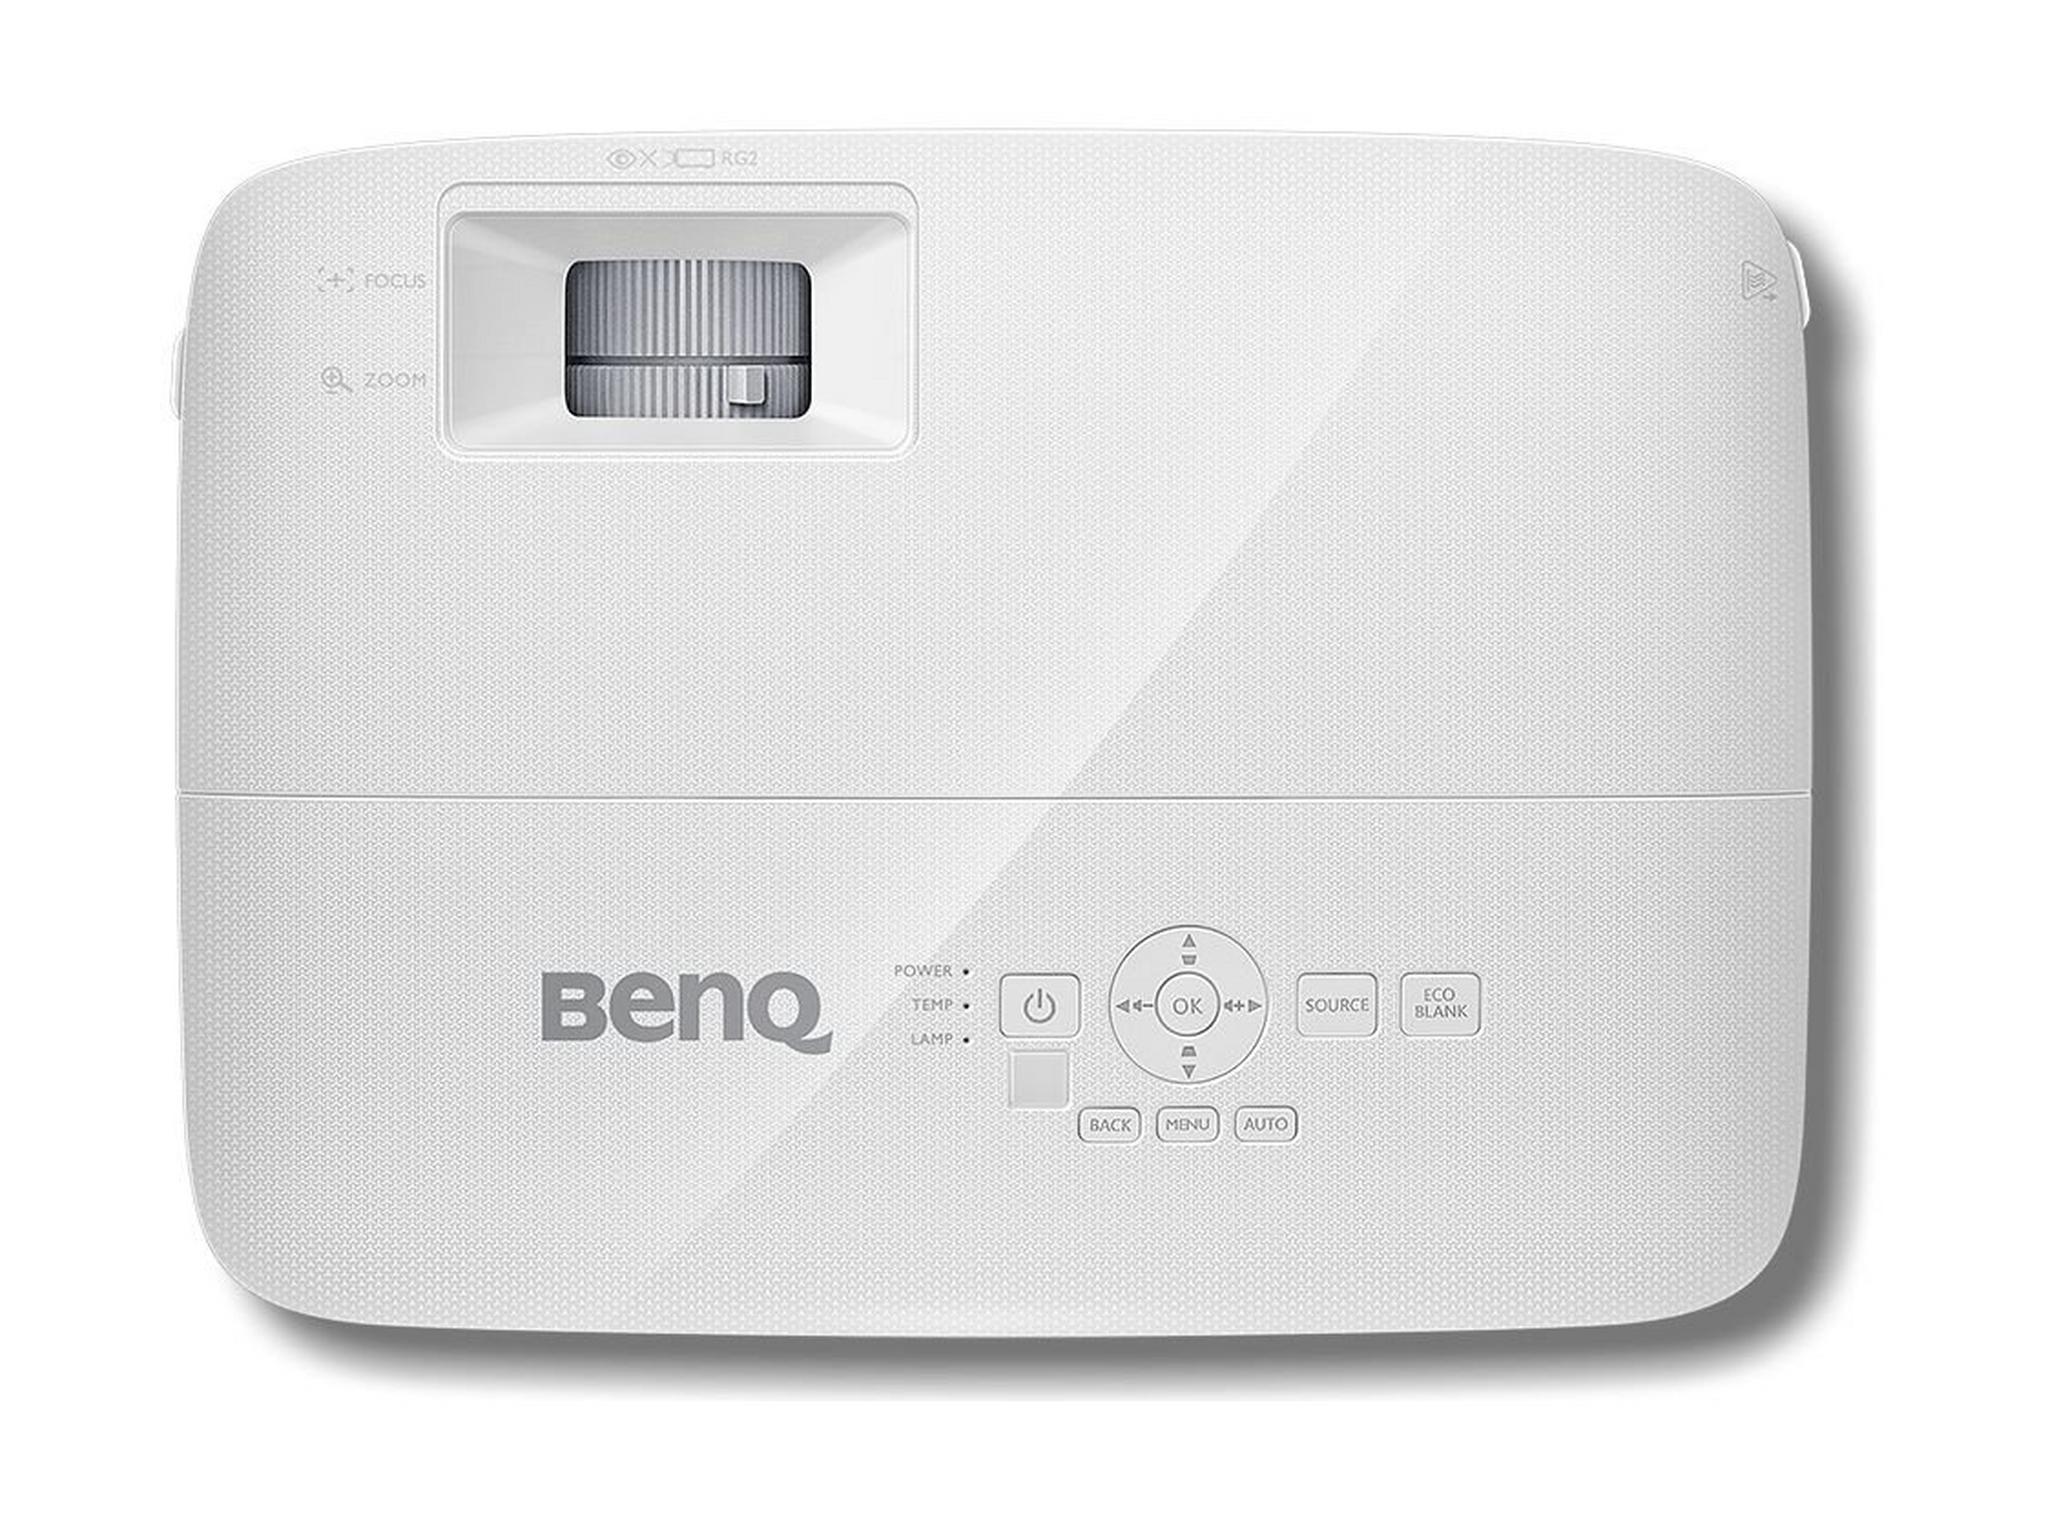 BenQ MX550 3600lm XGA Business Projector